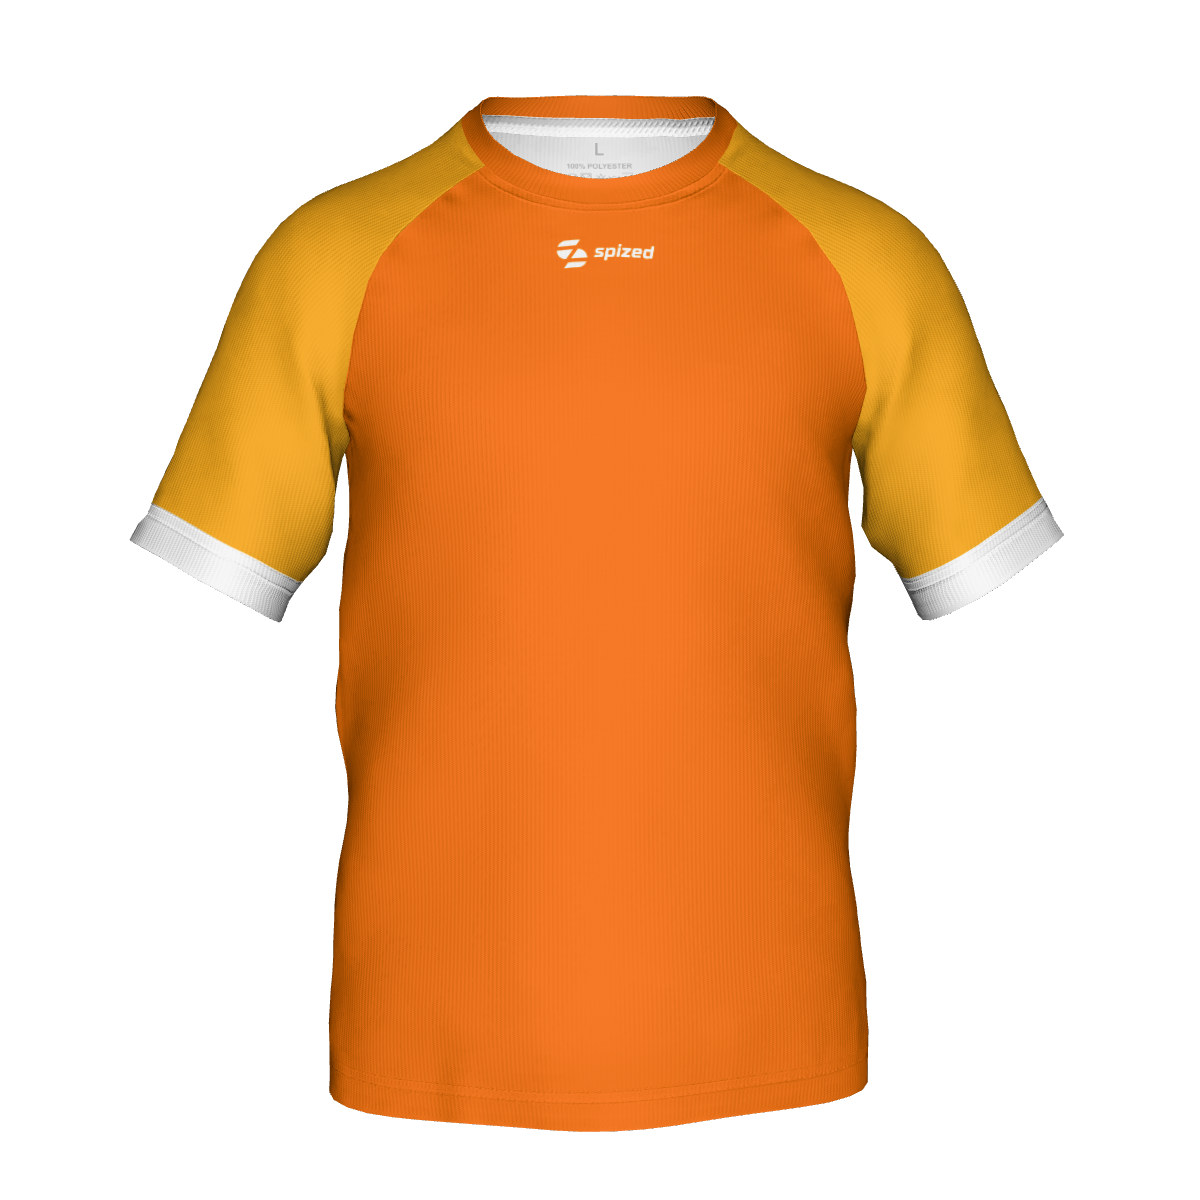 Rio children’s football jersey